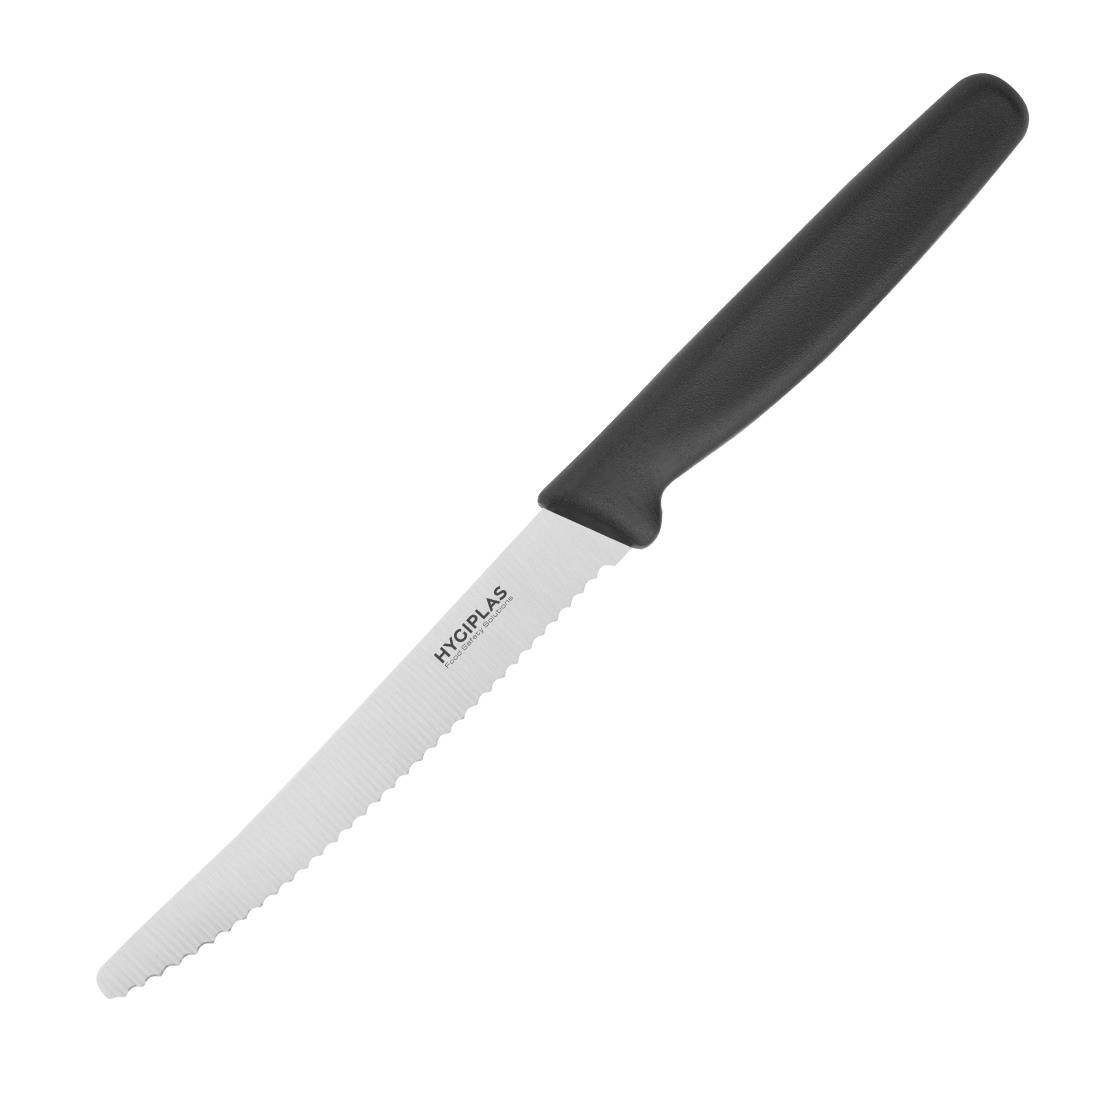 NISBETS SERRATED TOMATO KNIFE 10cmCF897